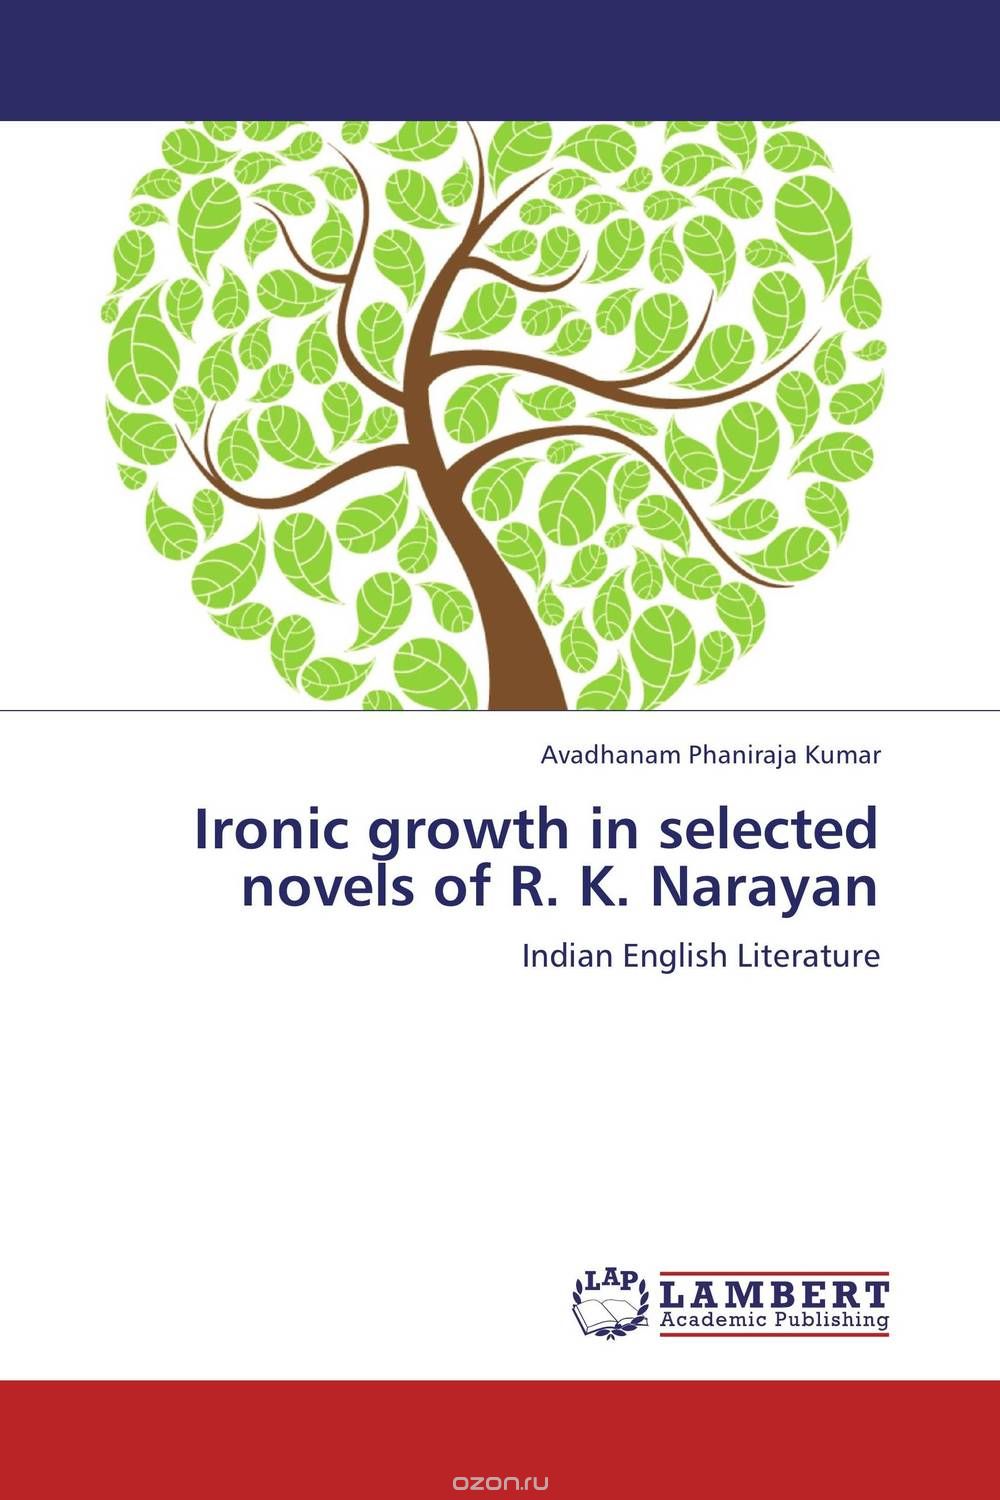 Скачать книгу "Ironic growth in selected novels of R. K. Narayan"